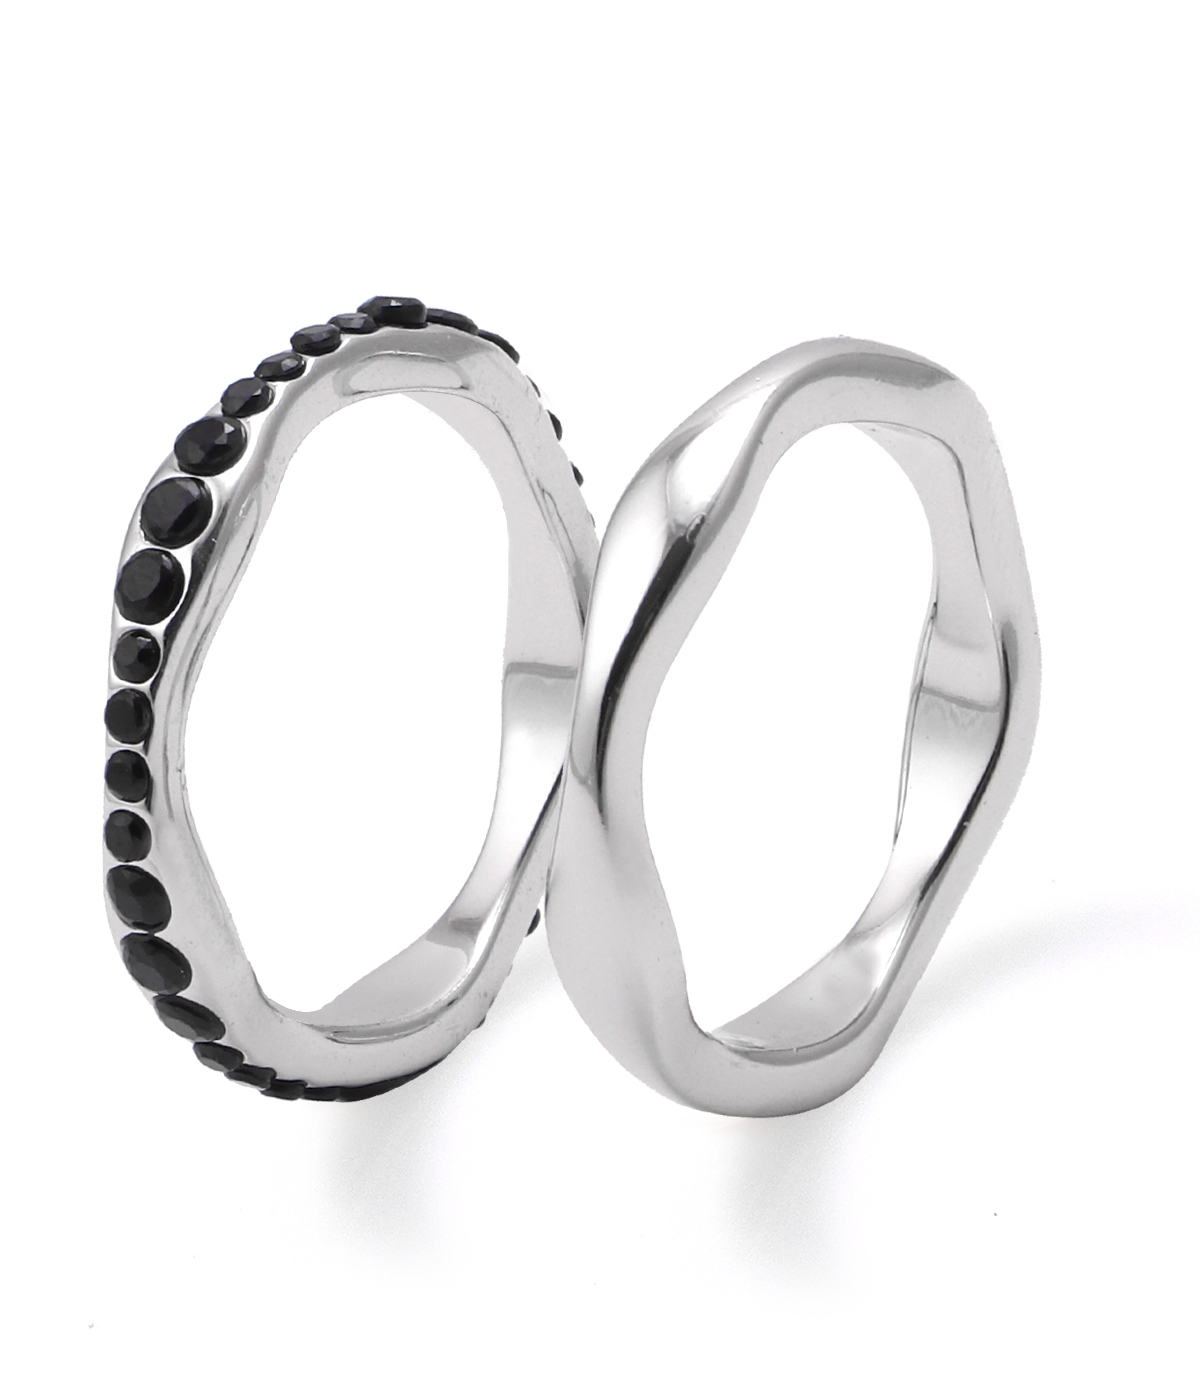 FLOW ring - black -latest RING,Band Ring design 2021